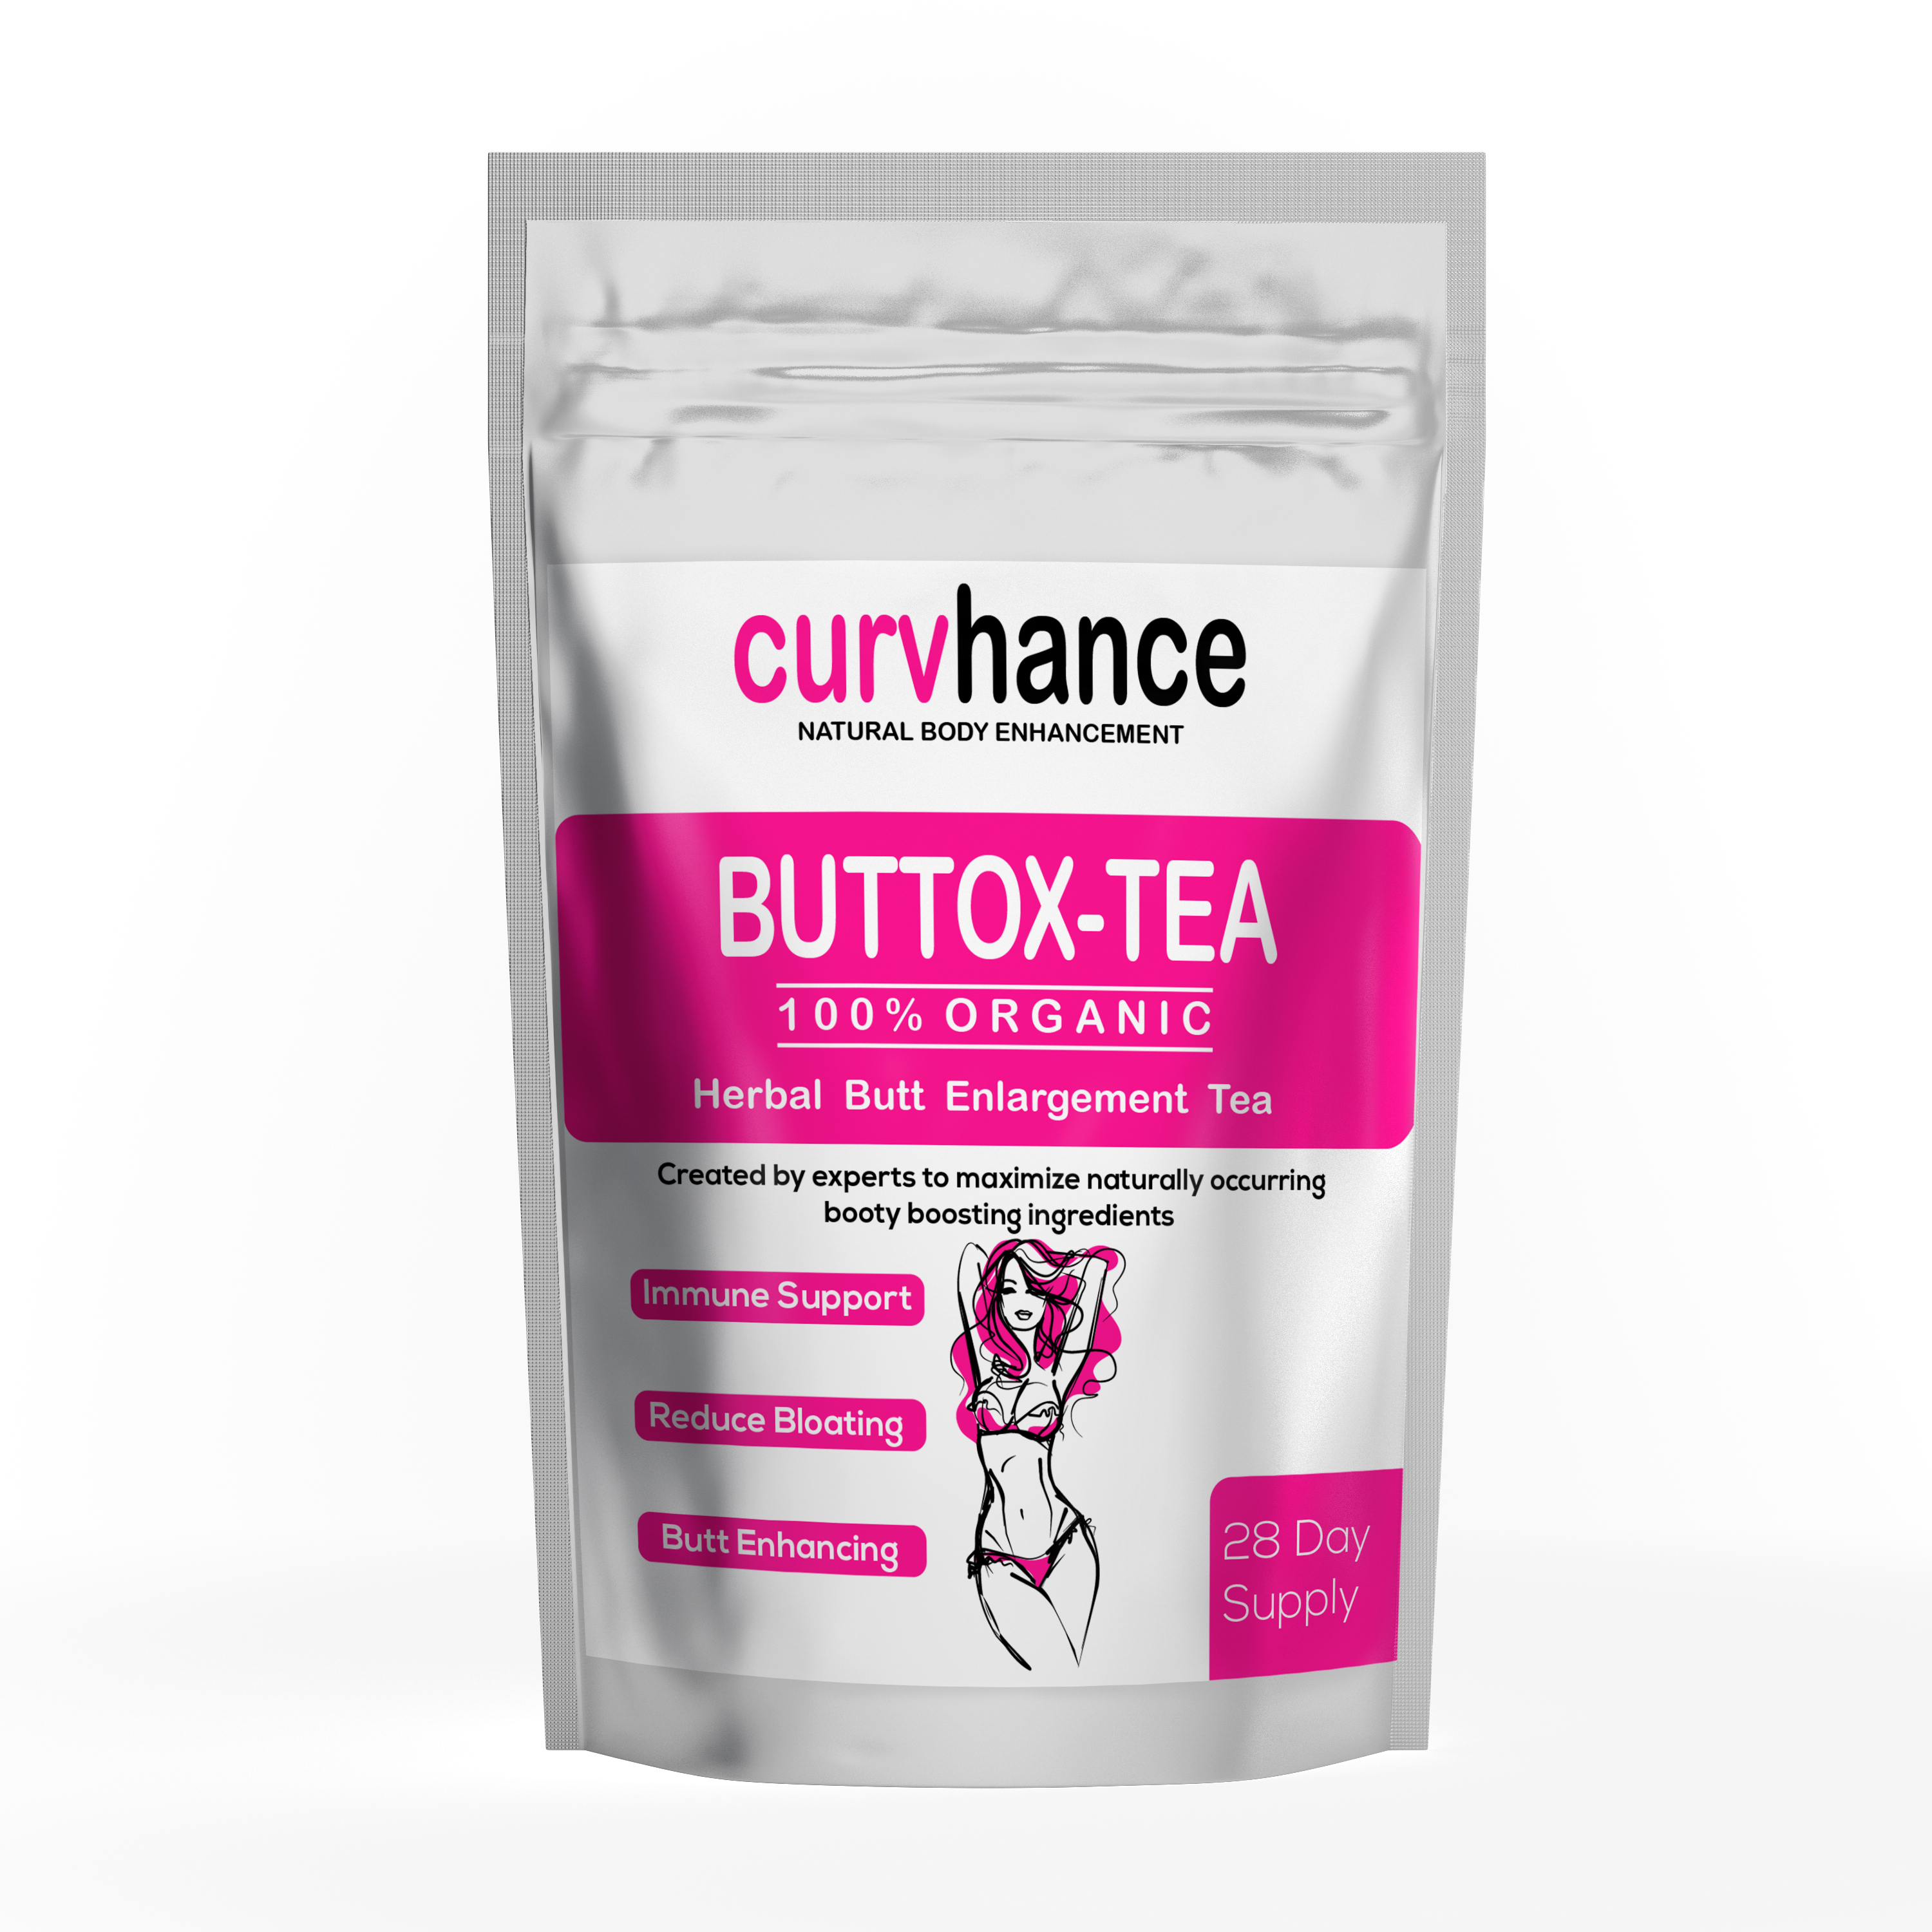 Shop curvhance Buttox-Tea online in USA at curvhance.com. 